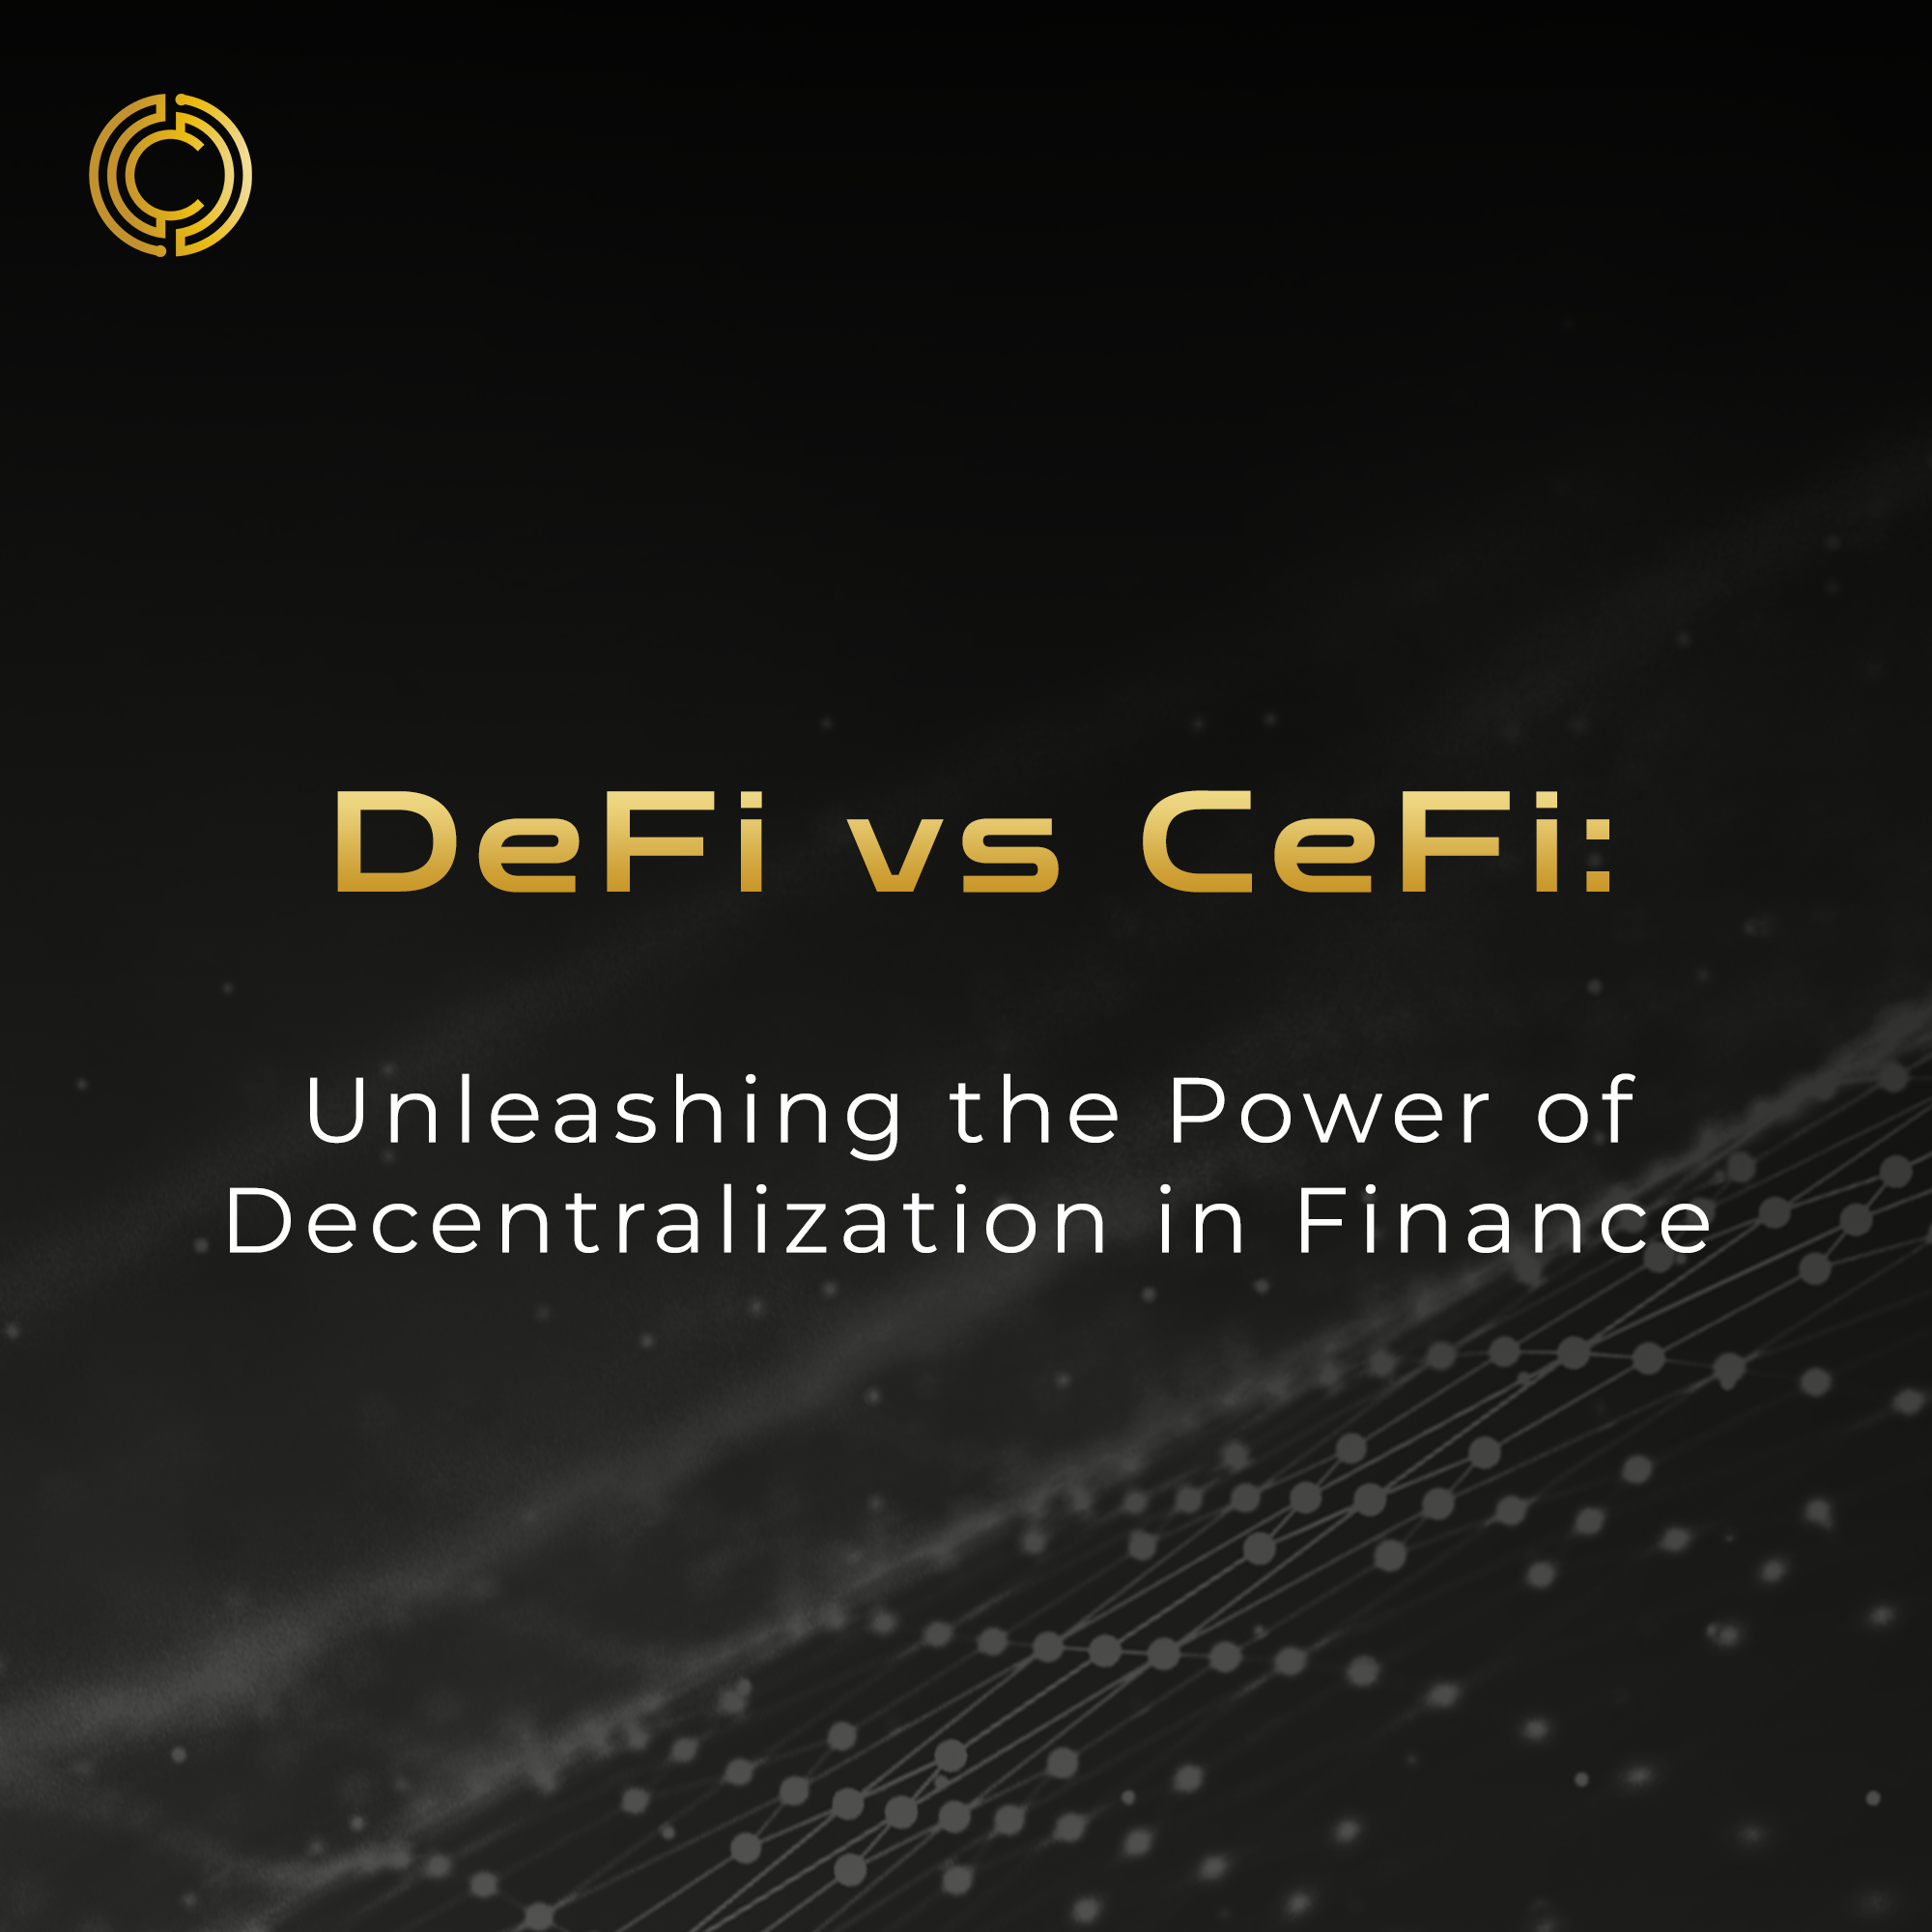 DeFi vs CeFi: Unleashing the Power of Decentralization in Finance